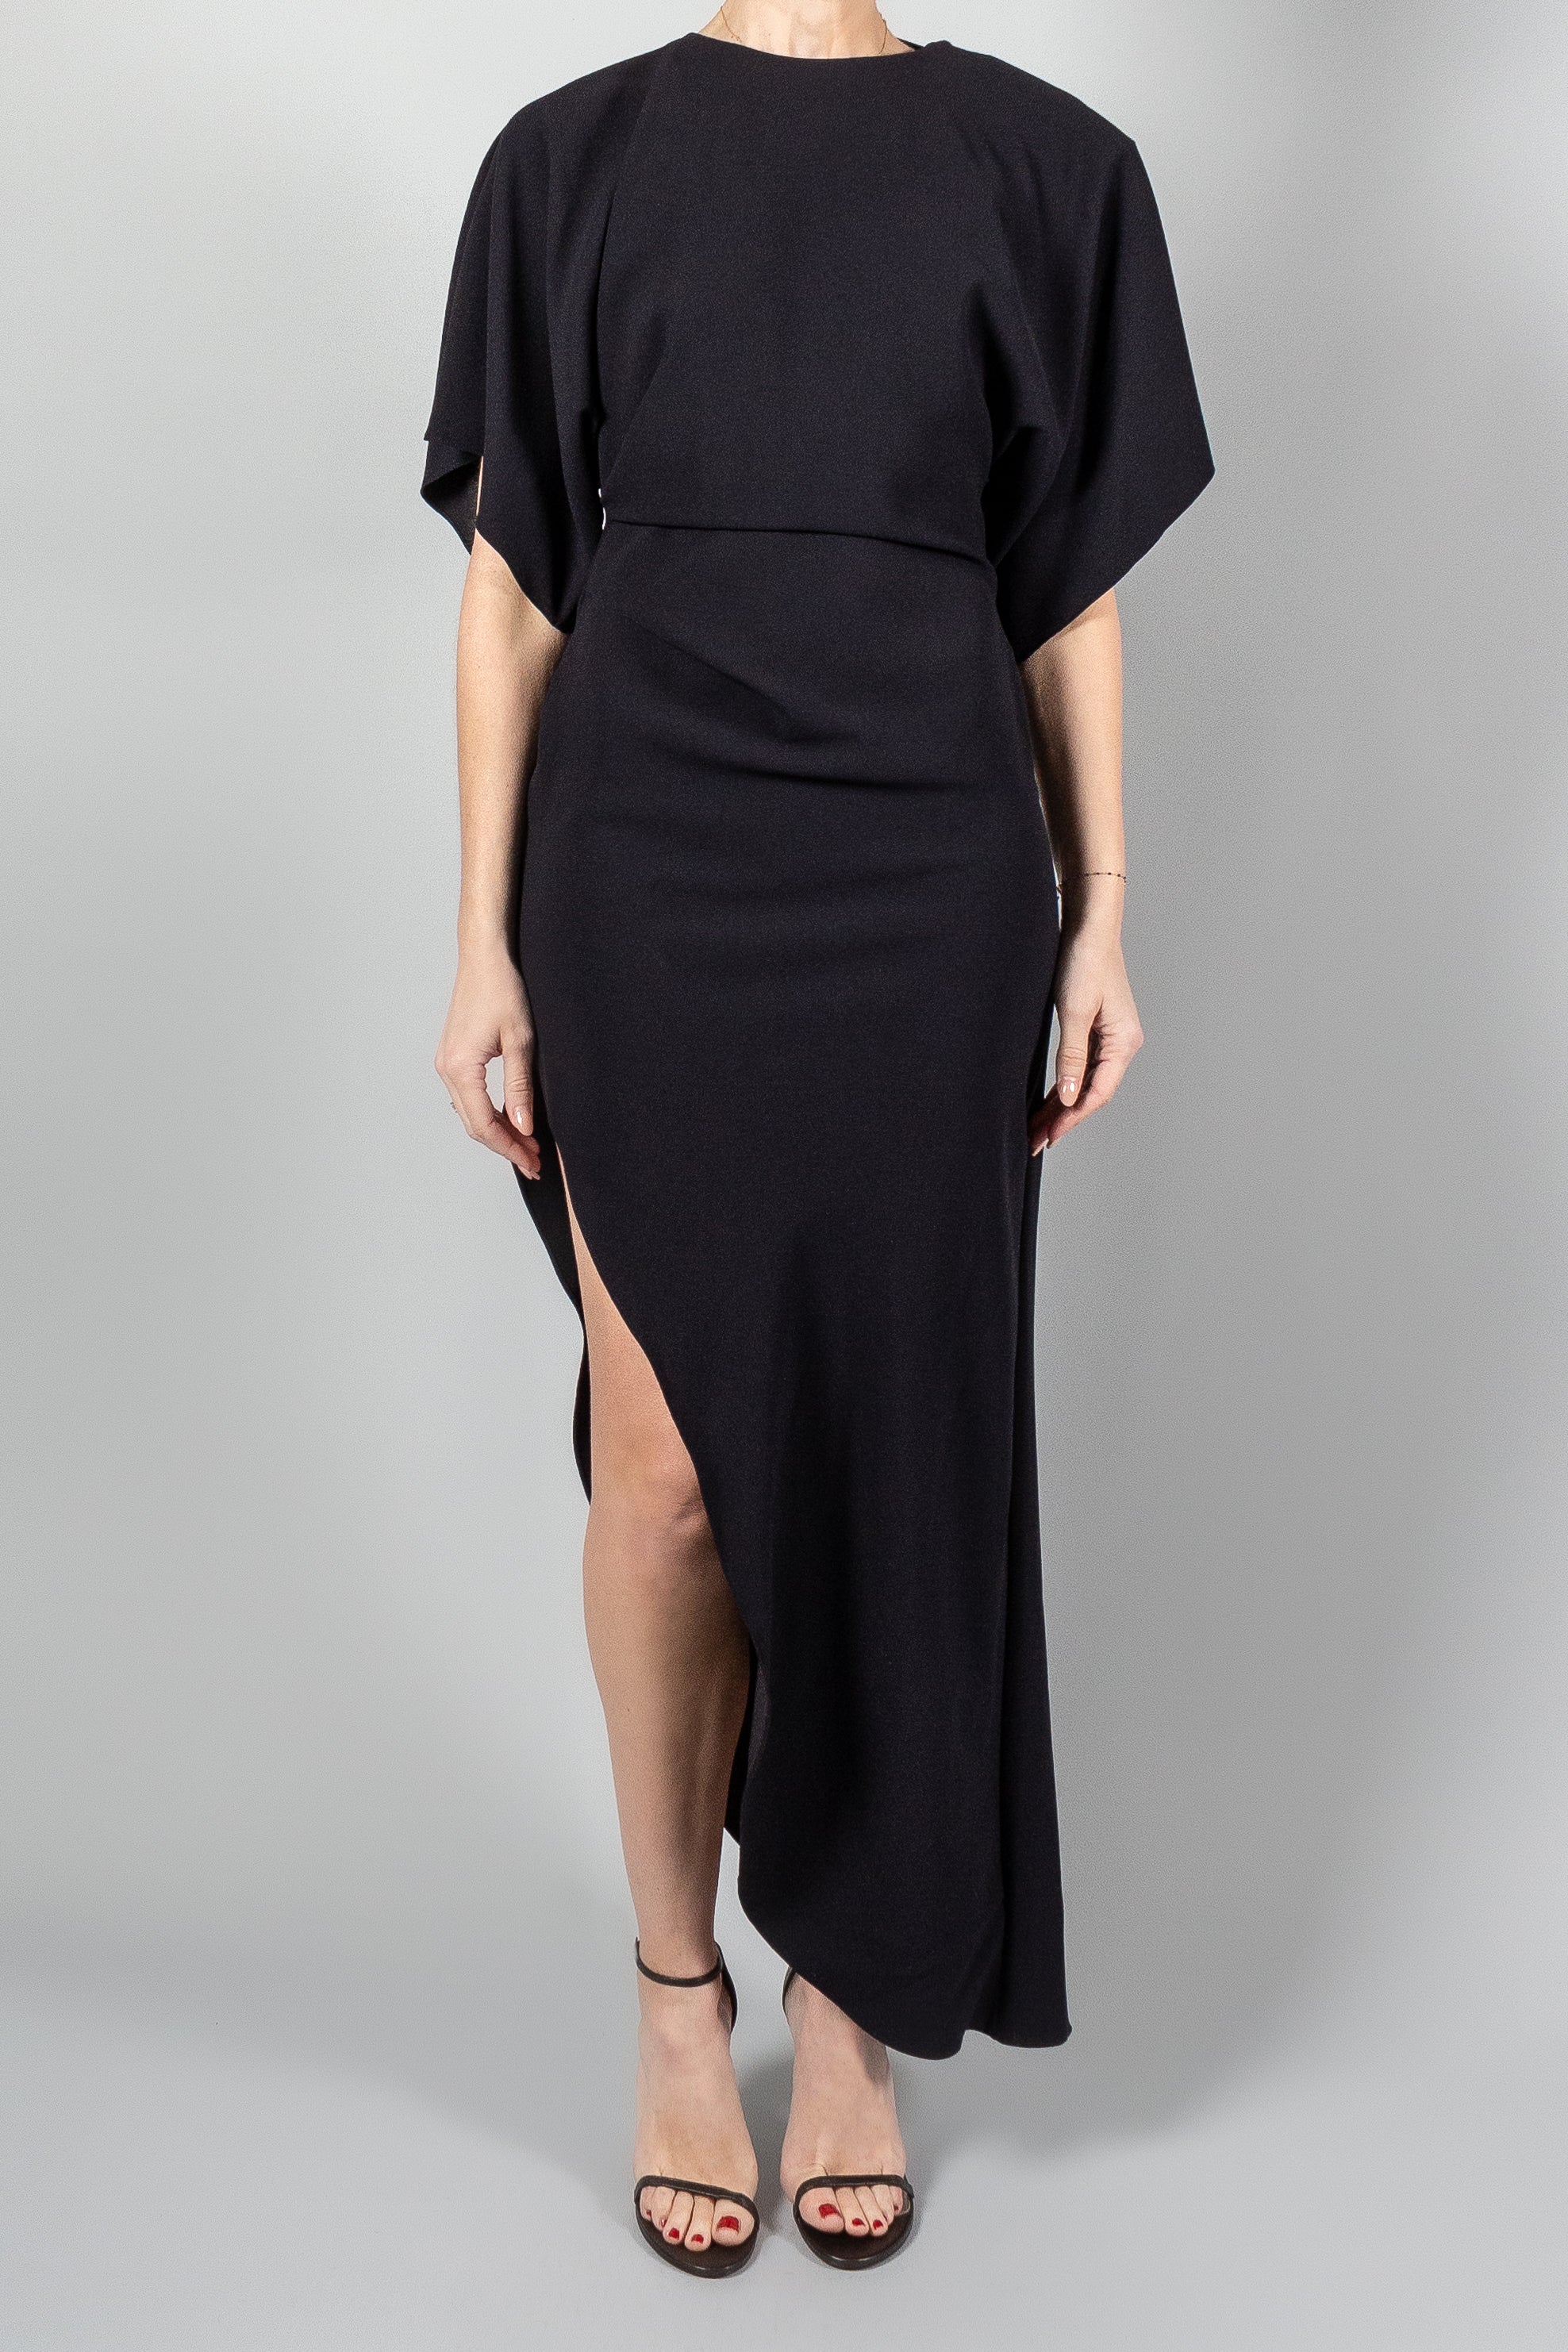 Rev The Savita Asymmetric Long Dress-Dresses and Jumpsuits-Misch-Boutique-Vancouver-Canada-misch.ca